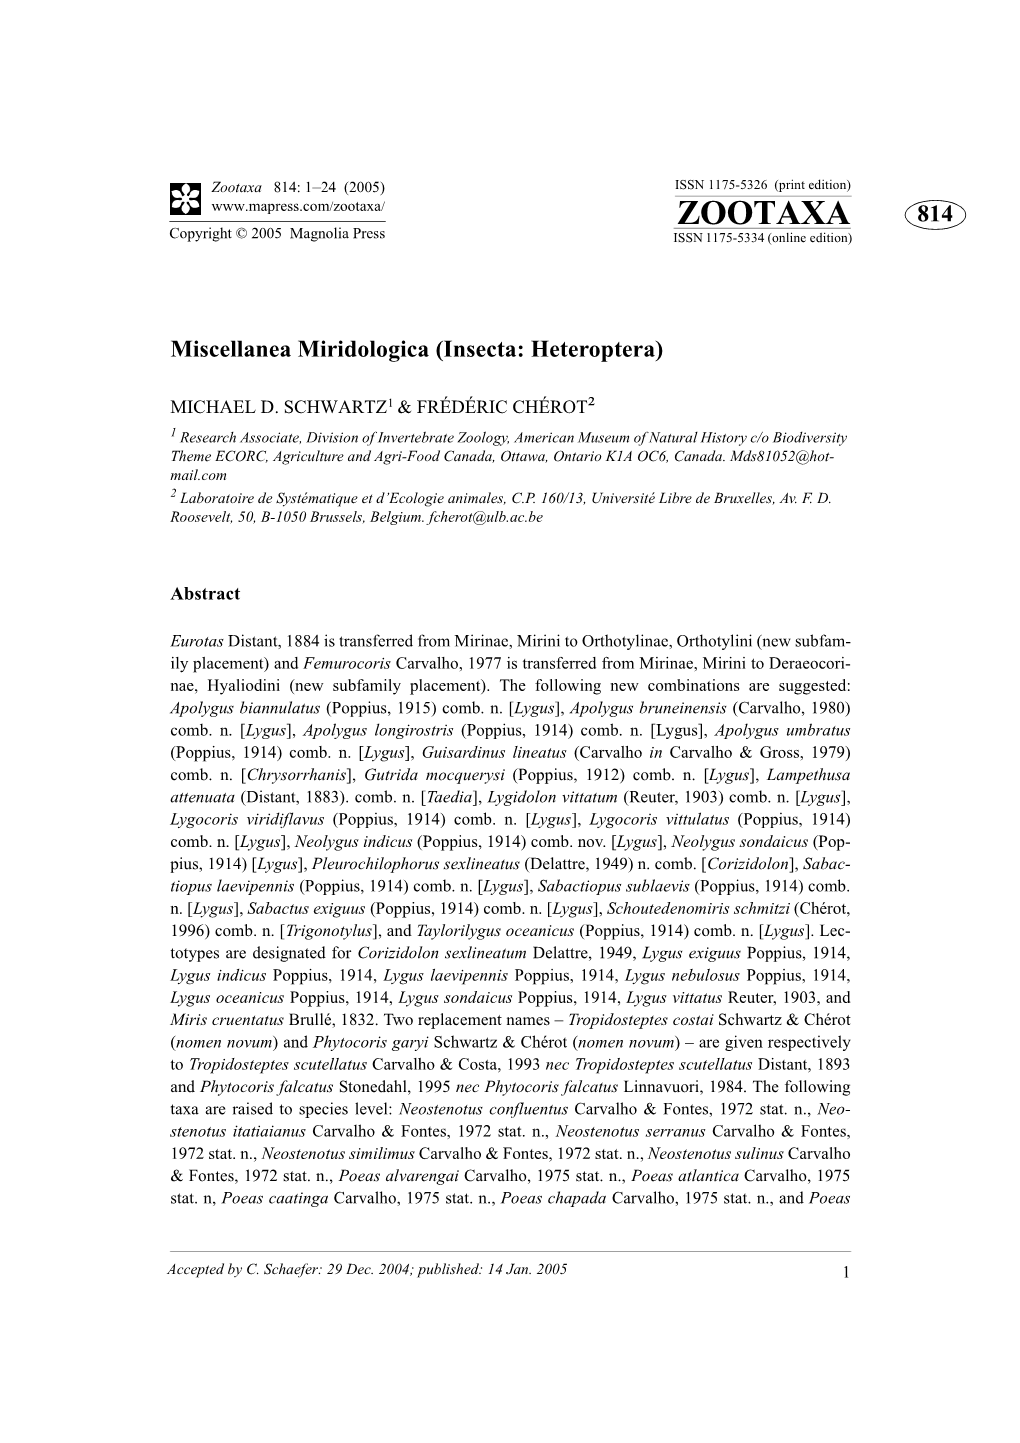 Zootaxa, Heteroptera, Miridae, Taxonomy